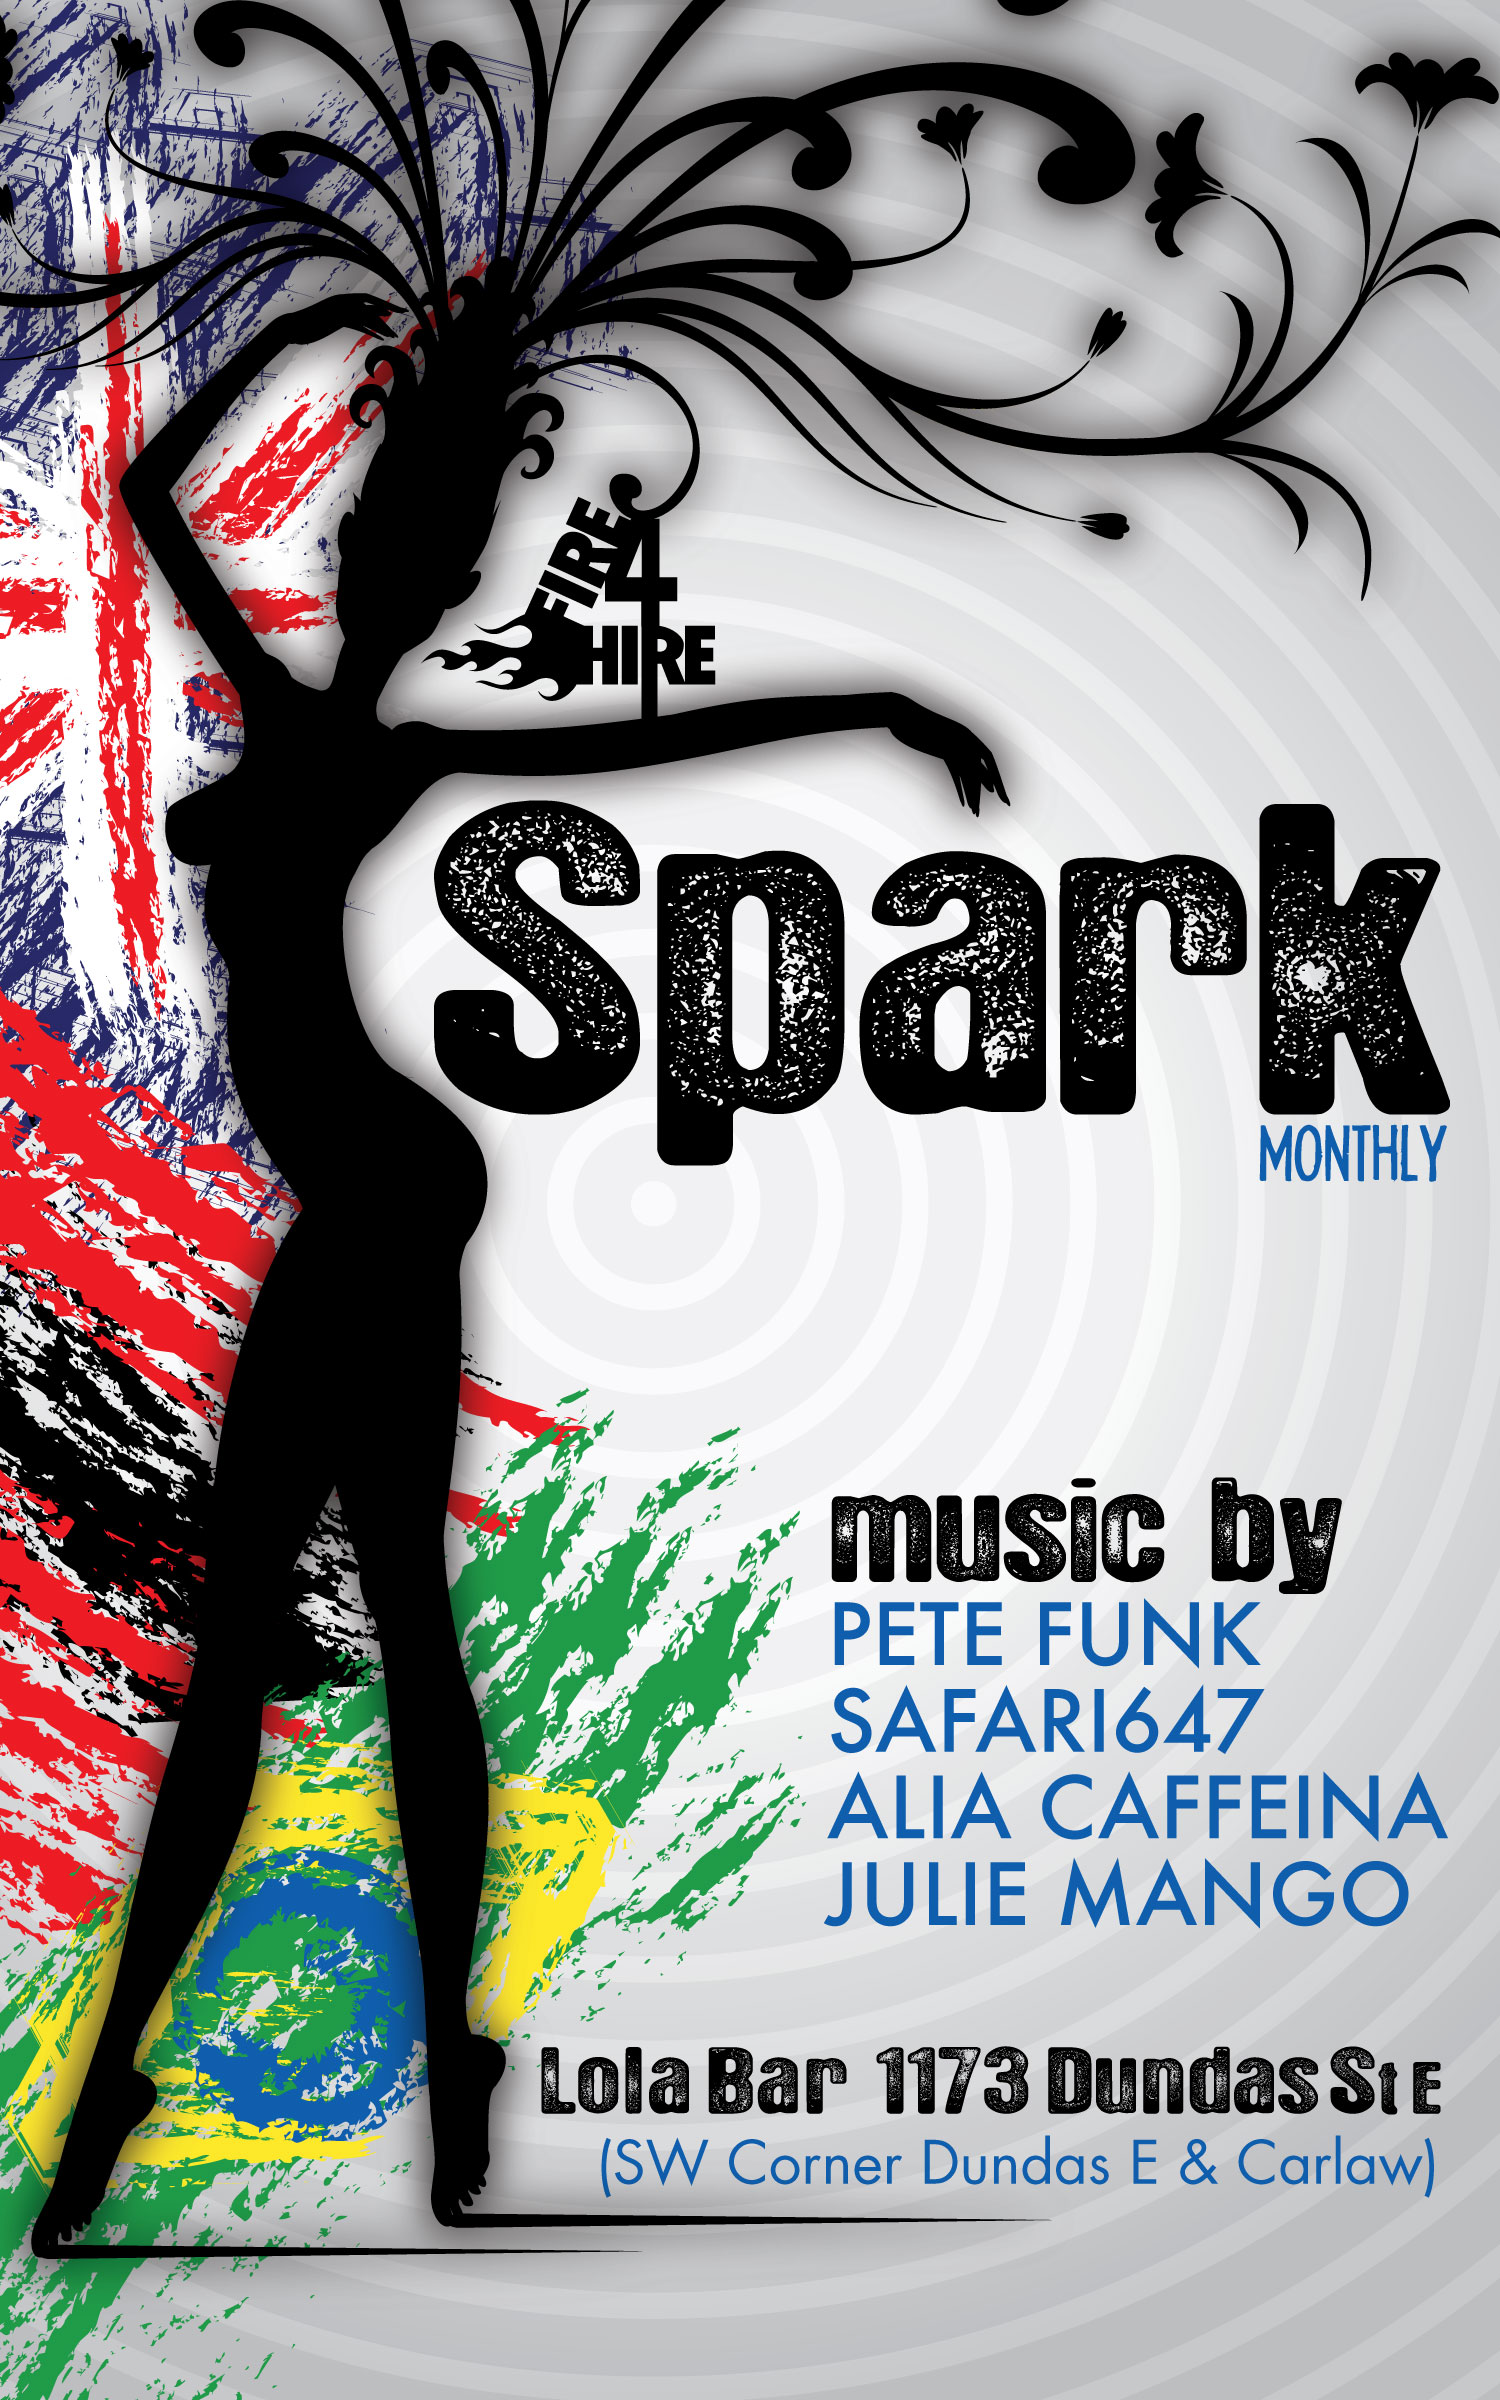 Spark Carnival Lola Bar Fire 4 Hire Soundsystem